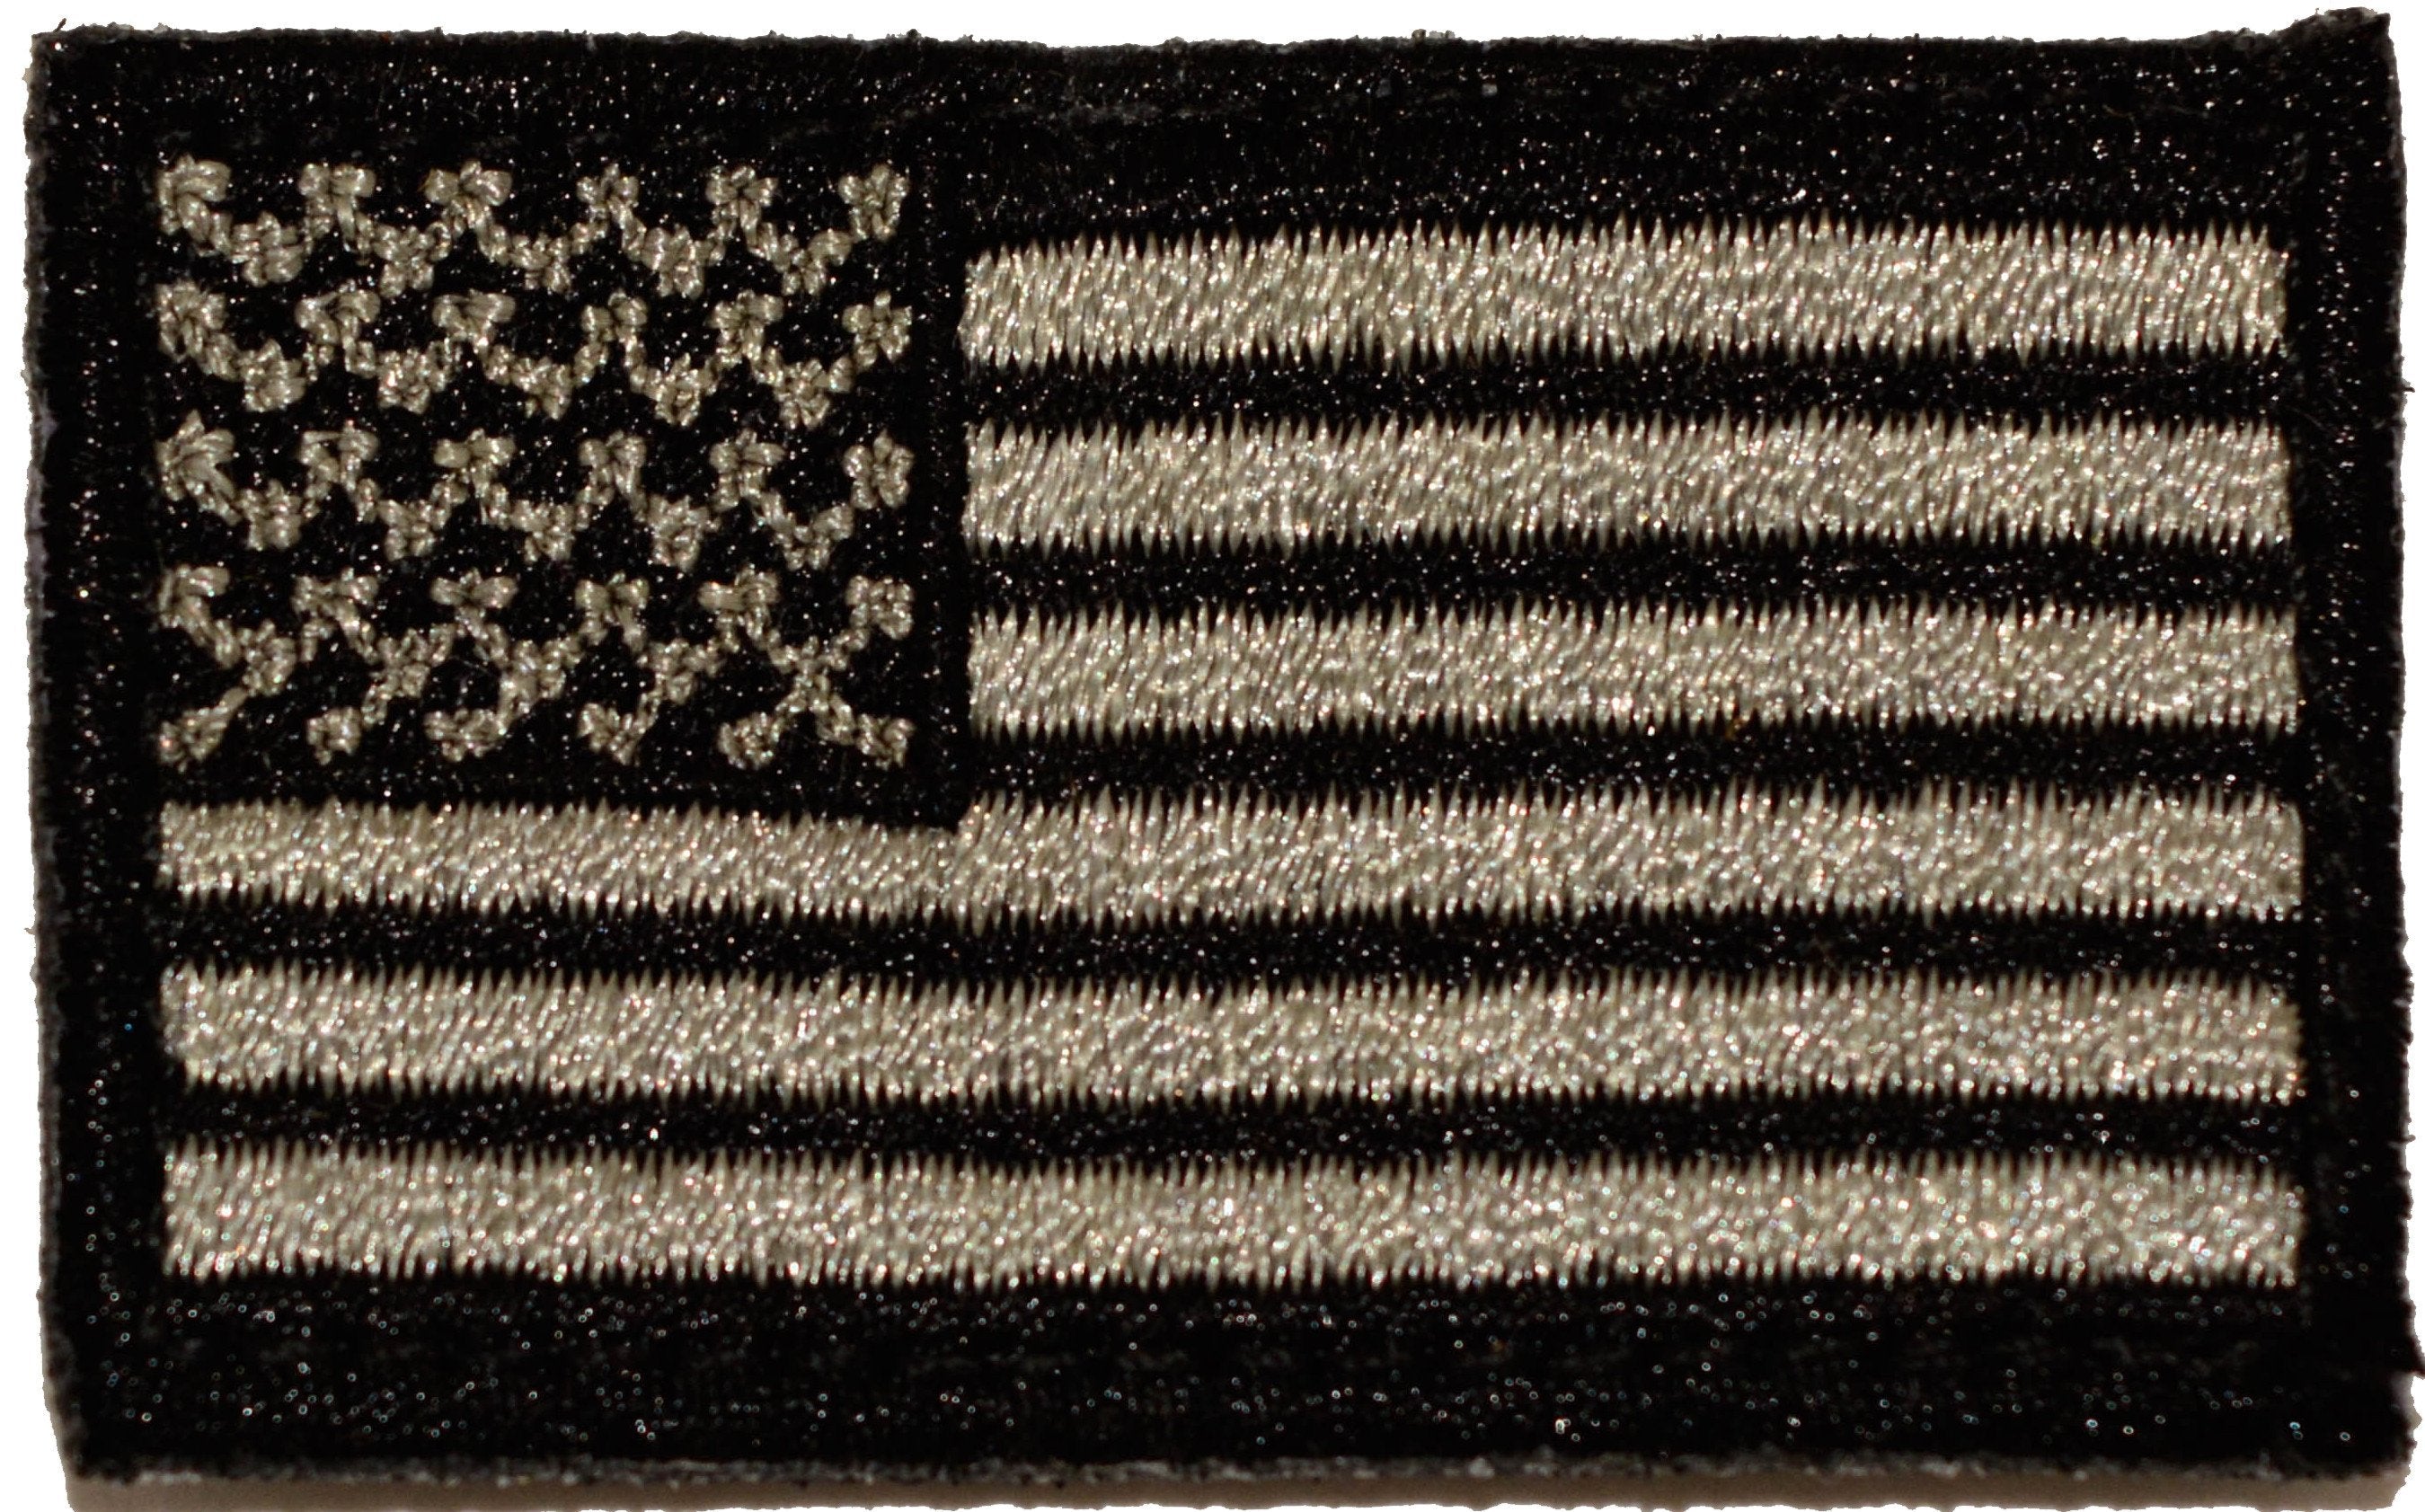 Mini USA Flag Patches - 1.25" x 2"